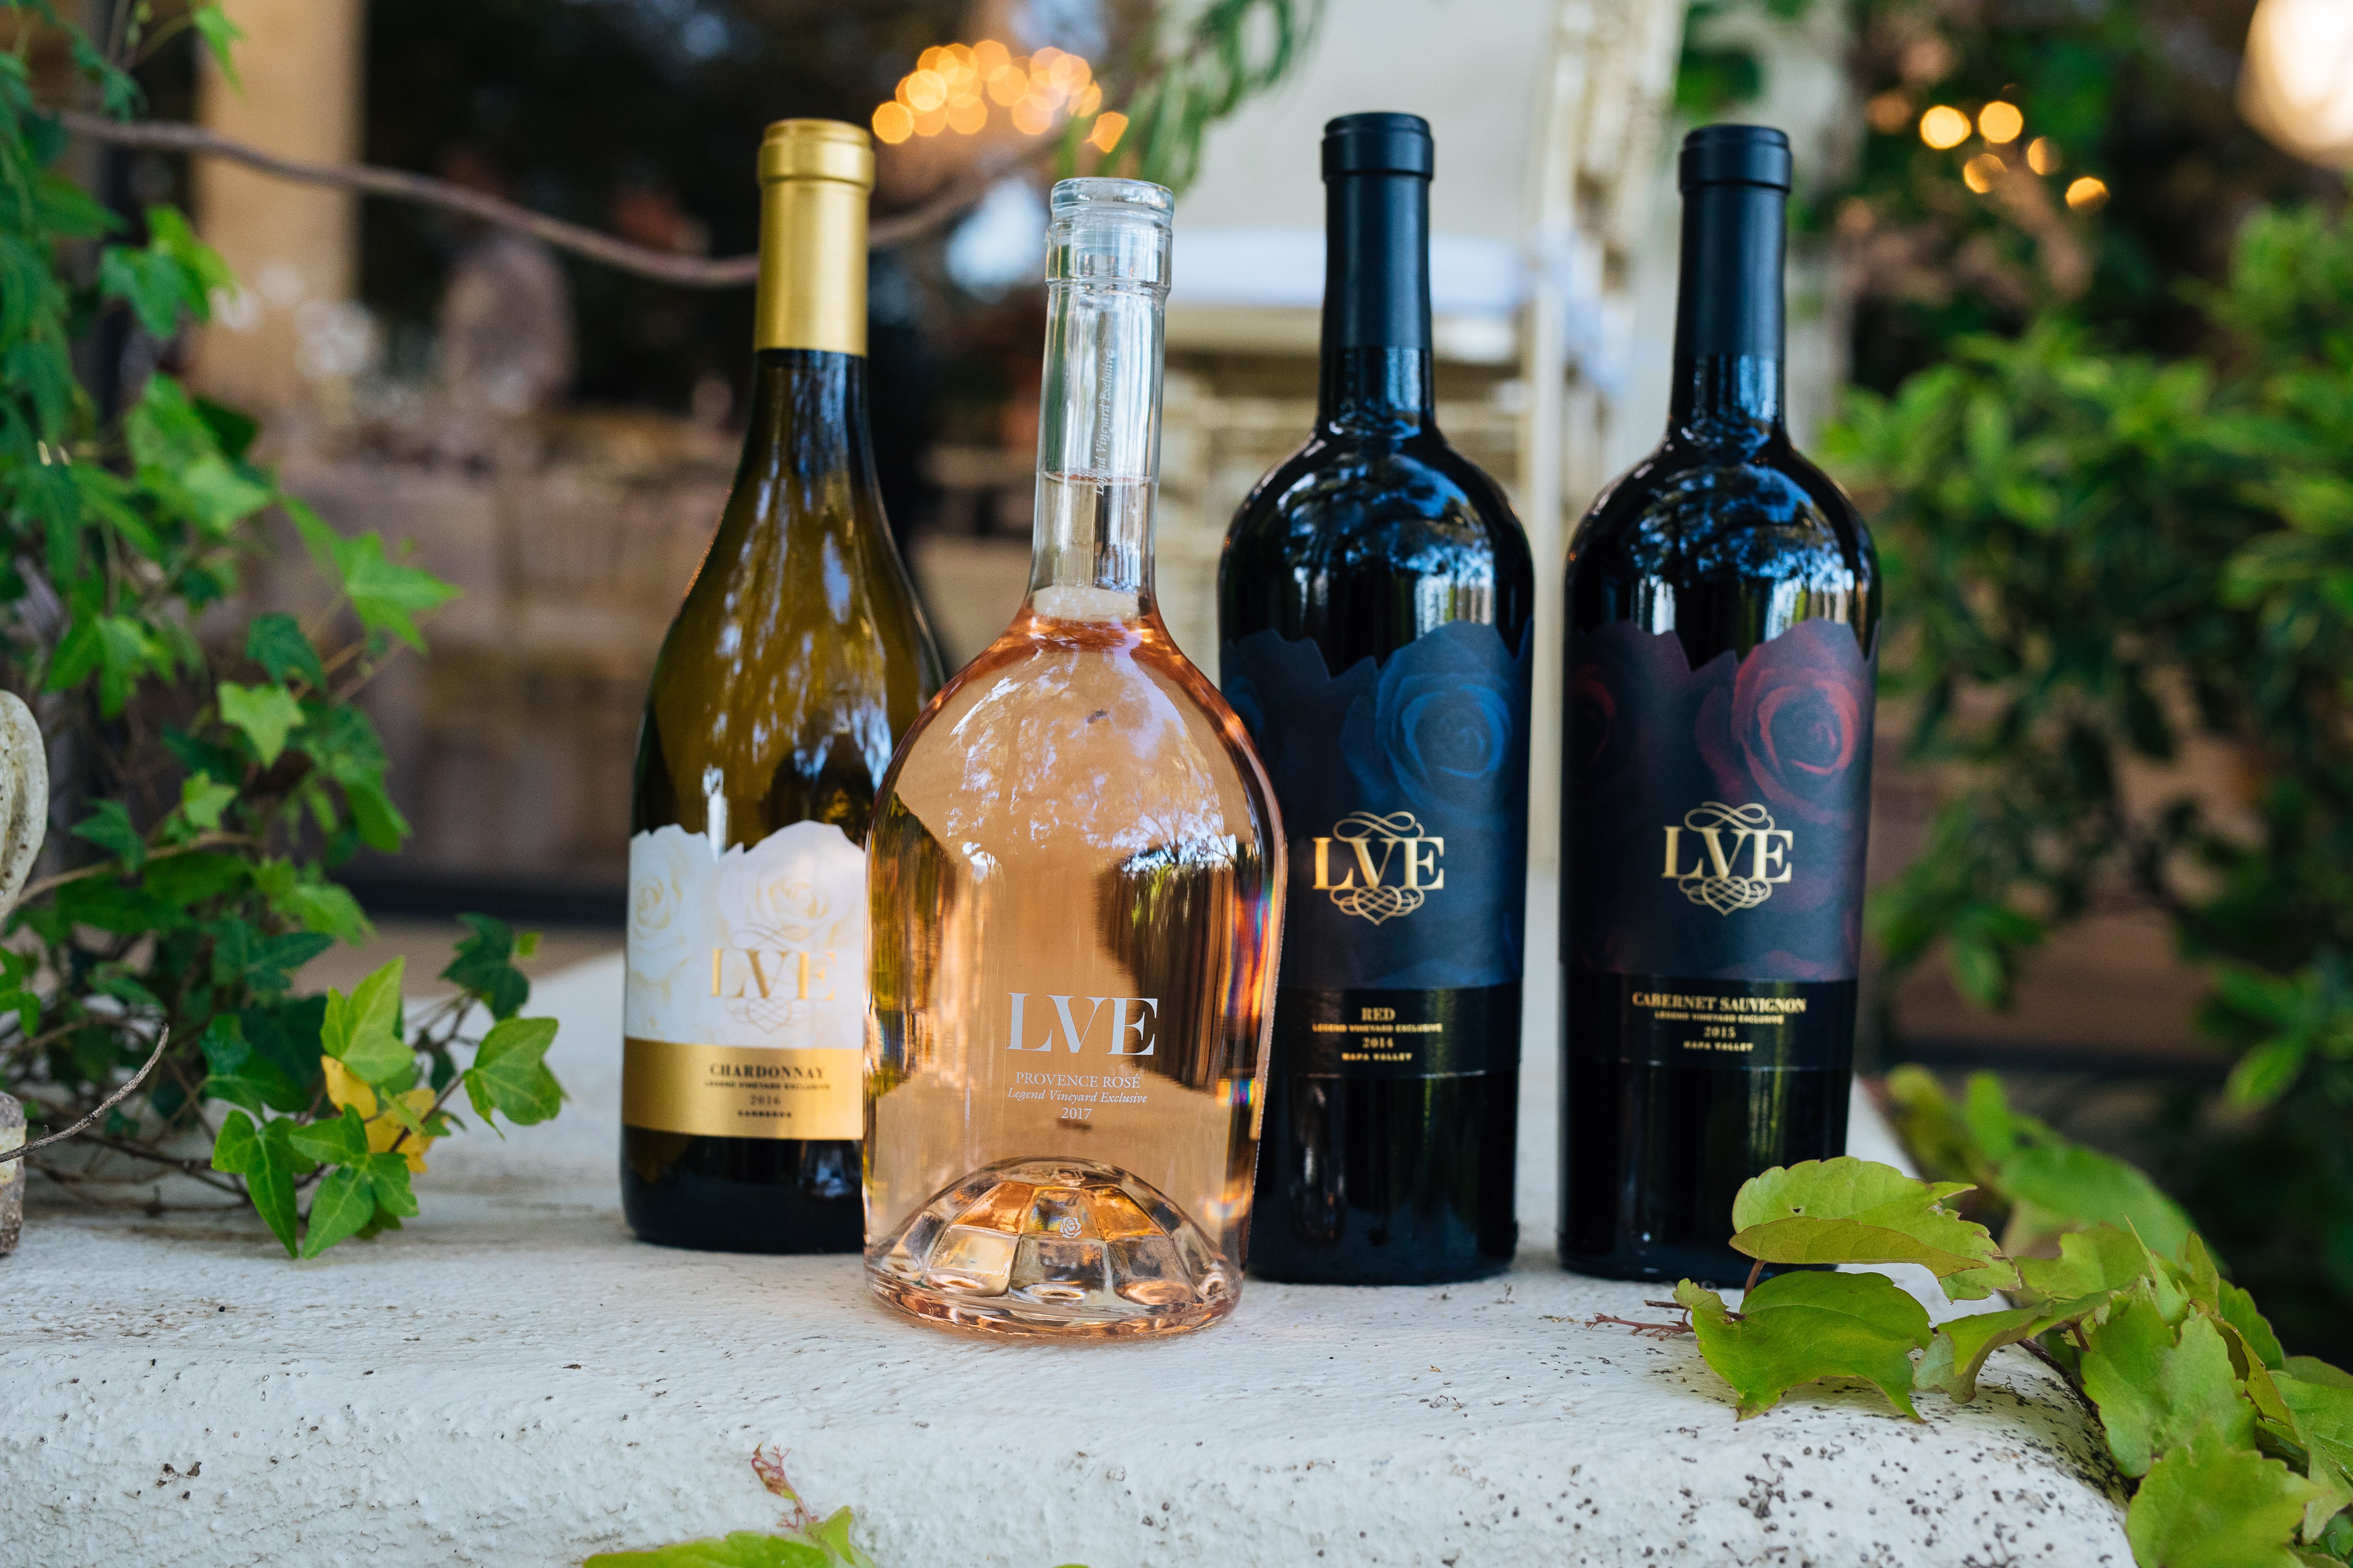 LVE Chardonnay, Rose, Red Blend, and Cabernet Sauvignon